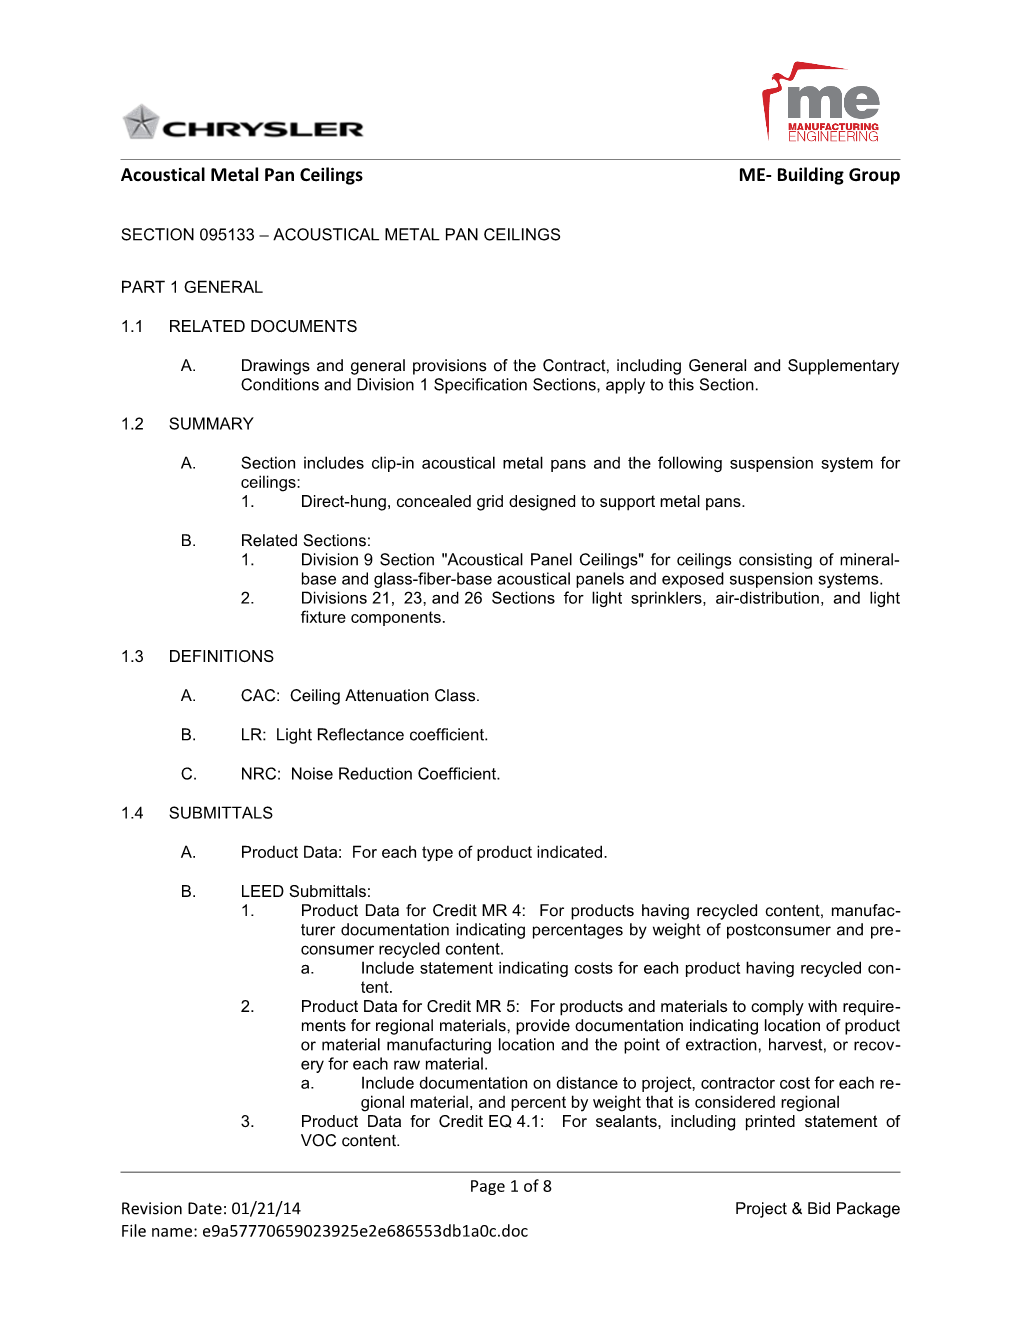 Section 09514 - Acoustical Metal Pan Ceilings